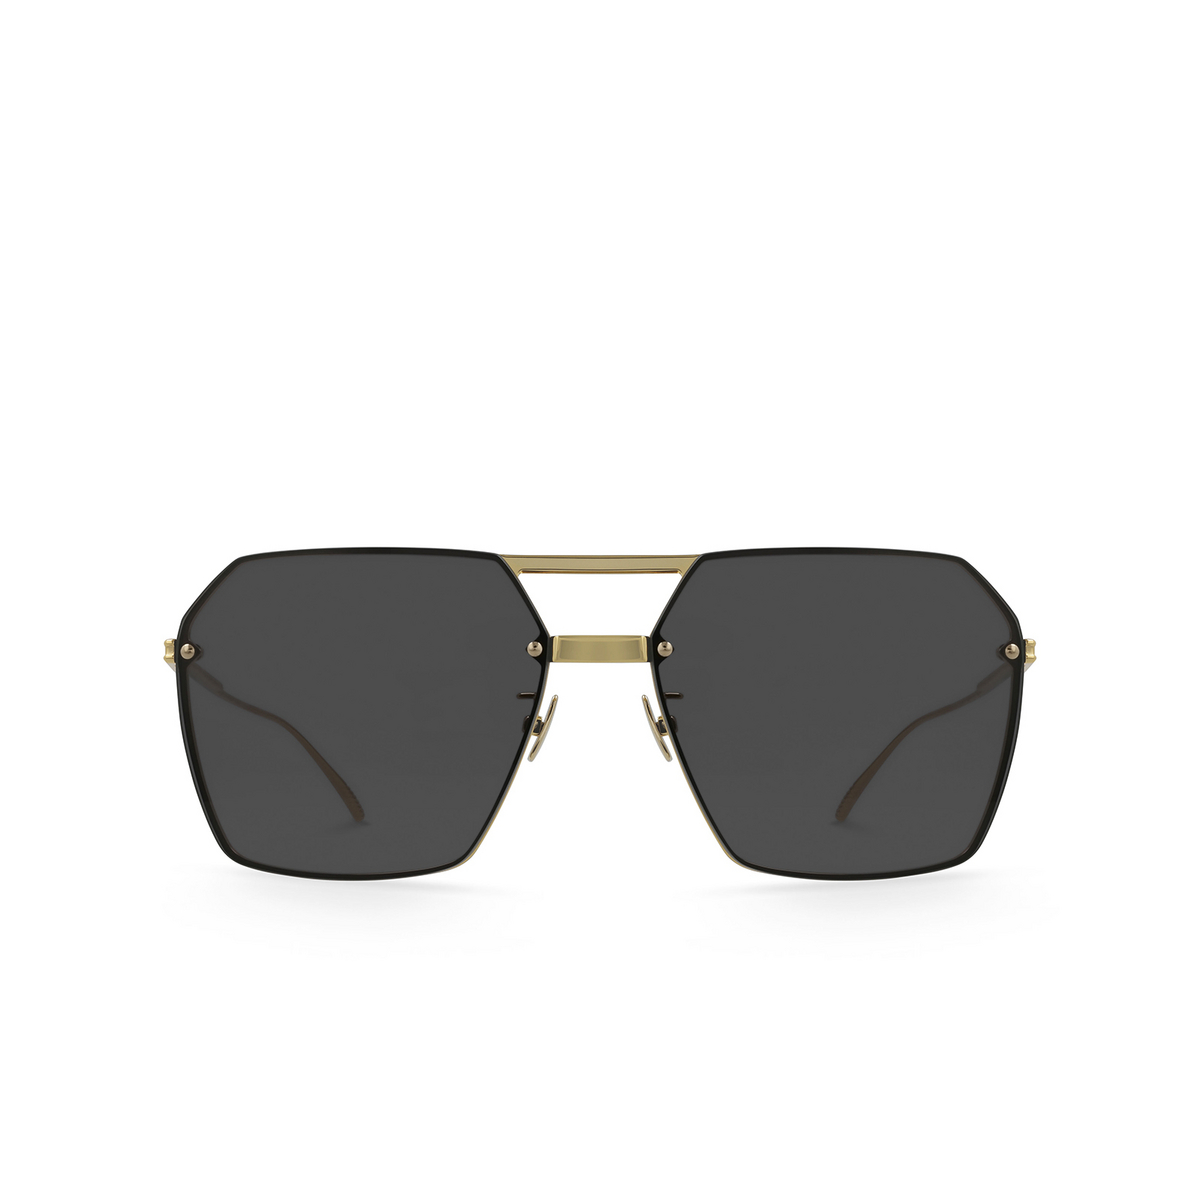 Bottega Veneta® Irregular Sunglasses: BV1045S color Gold 001 - front view.